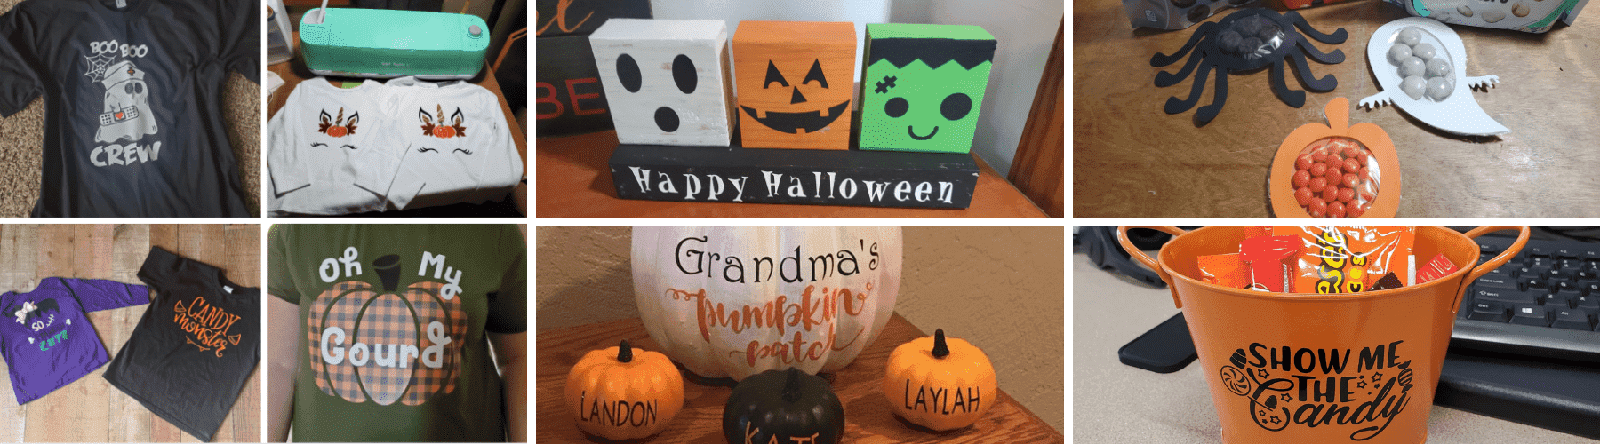 5 DIY Halloween Decorations with Cricut